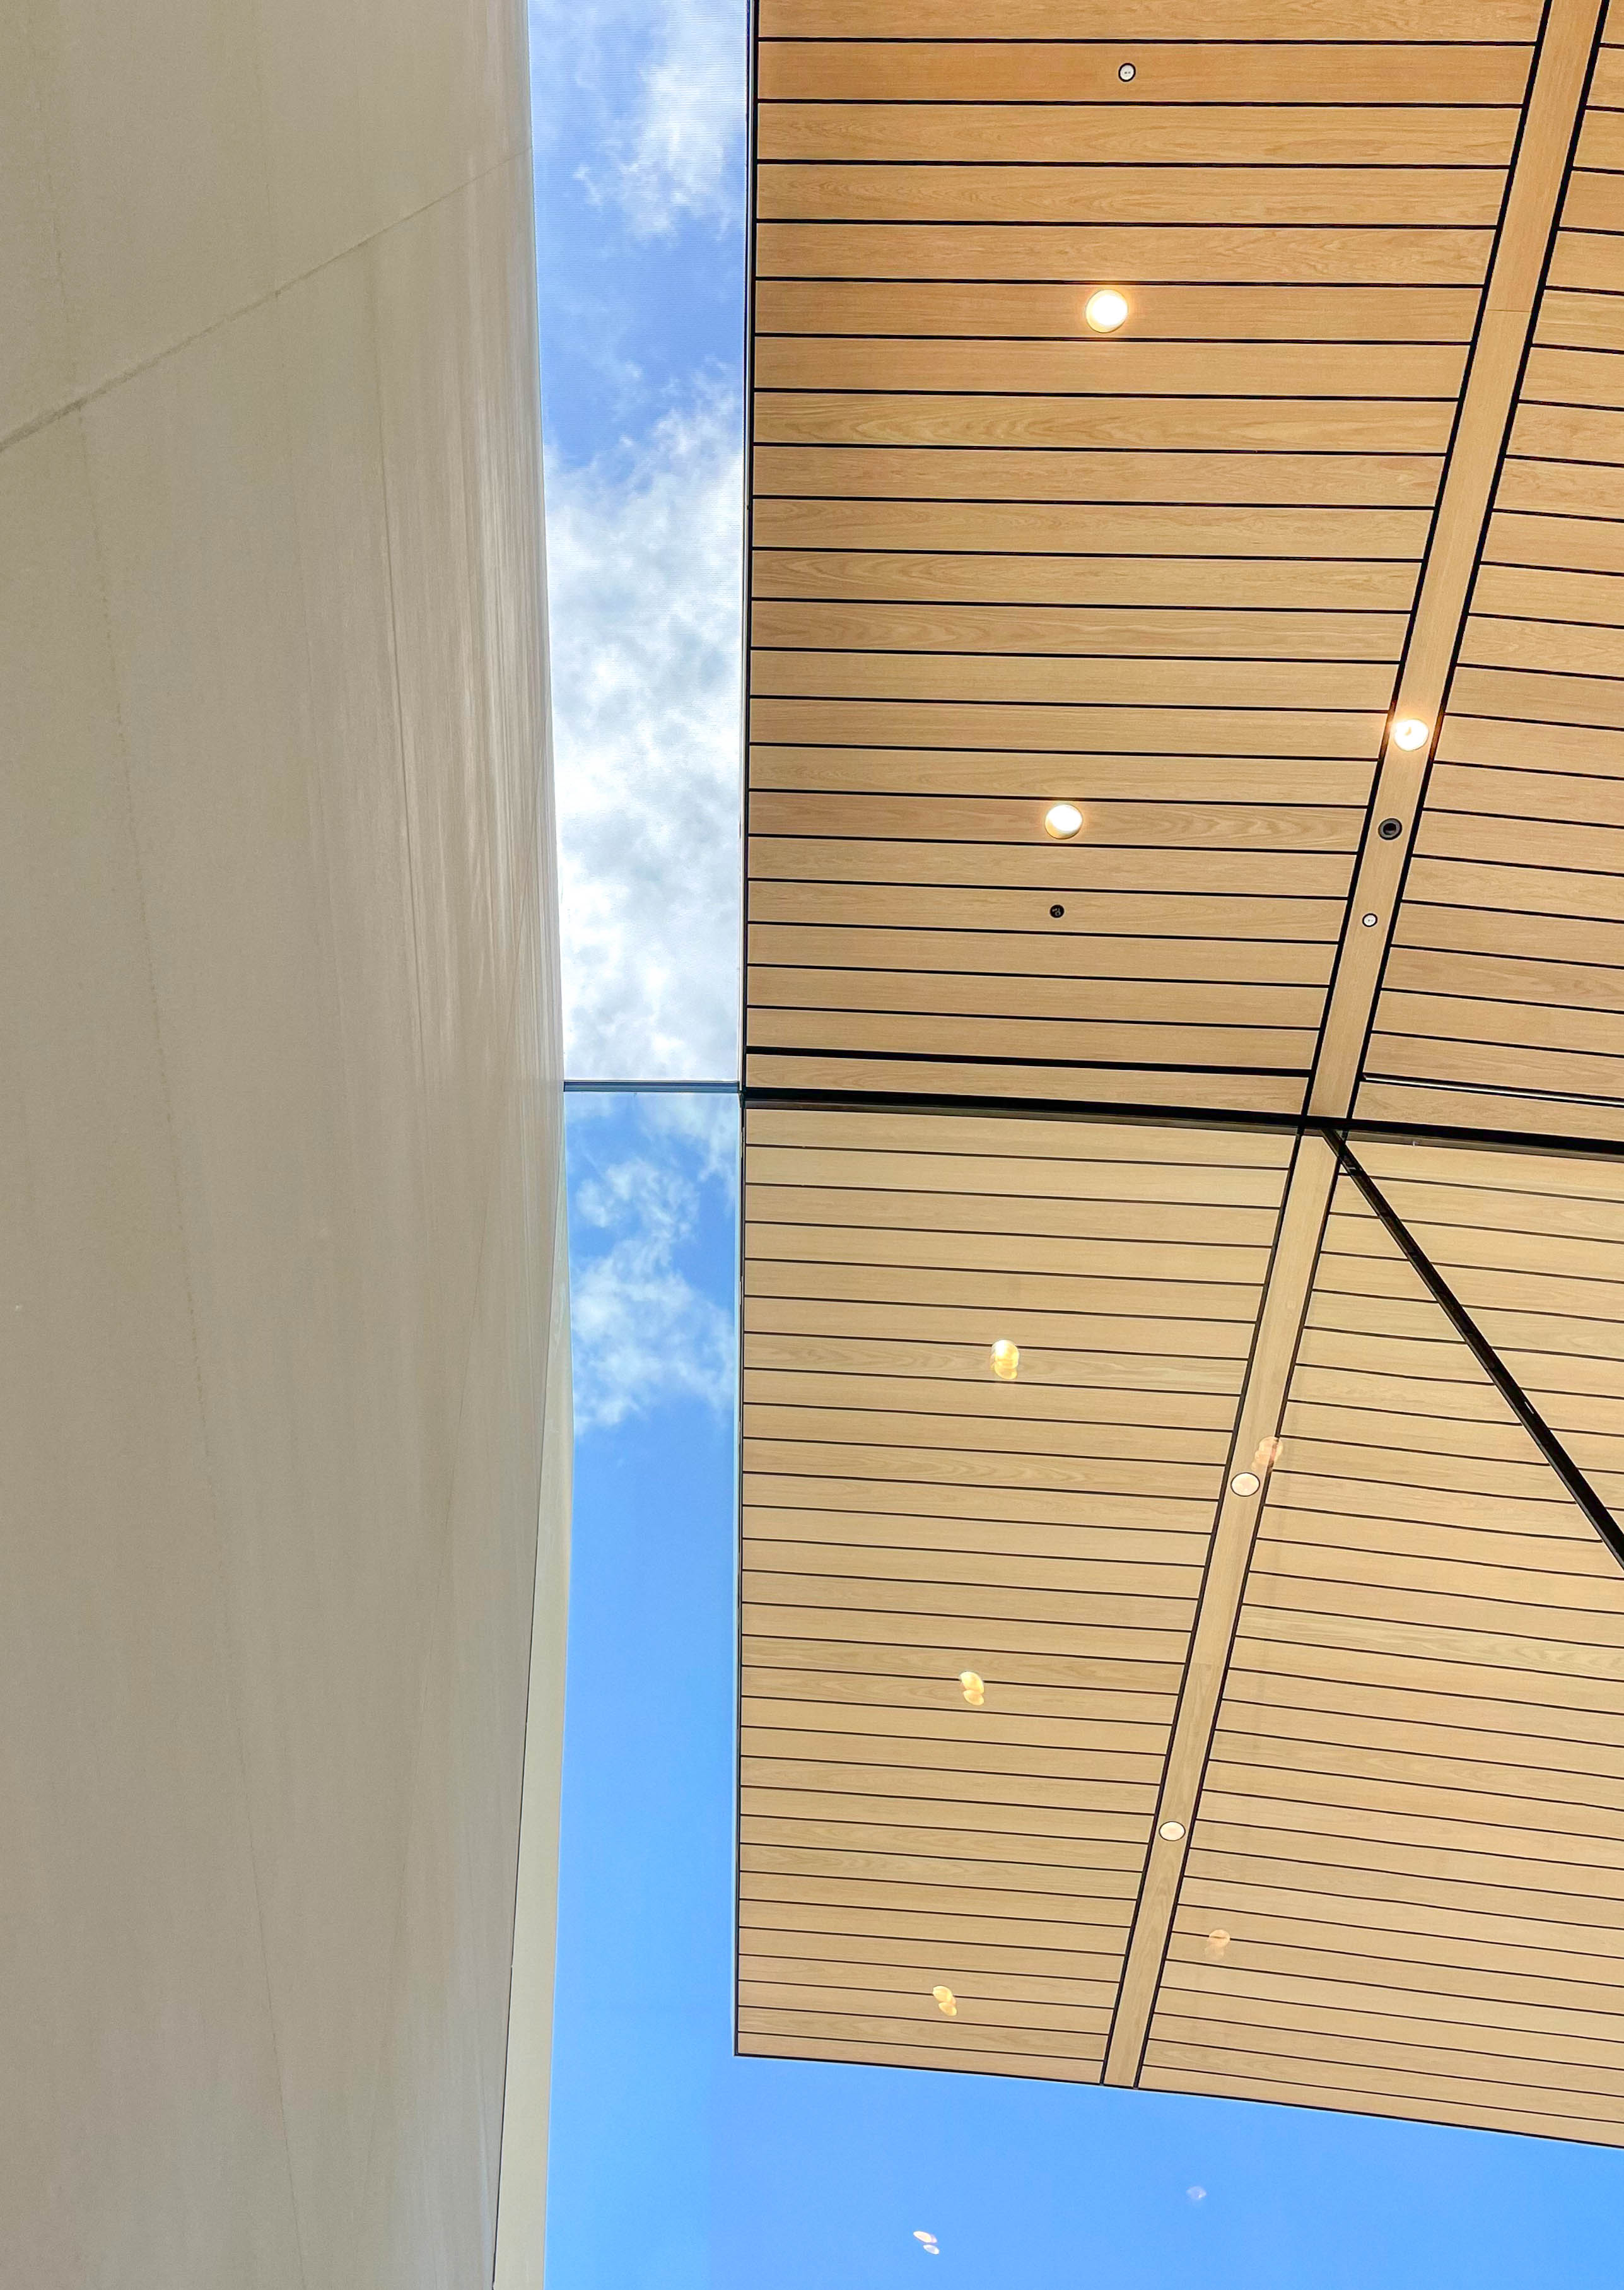 The skylight at Apple Dadeland.